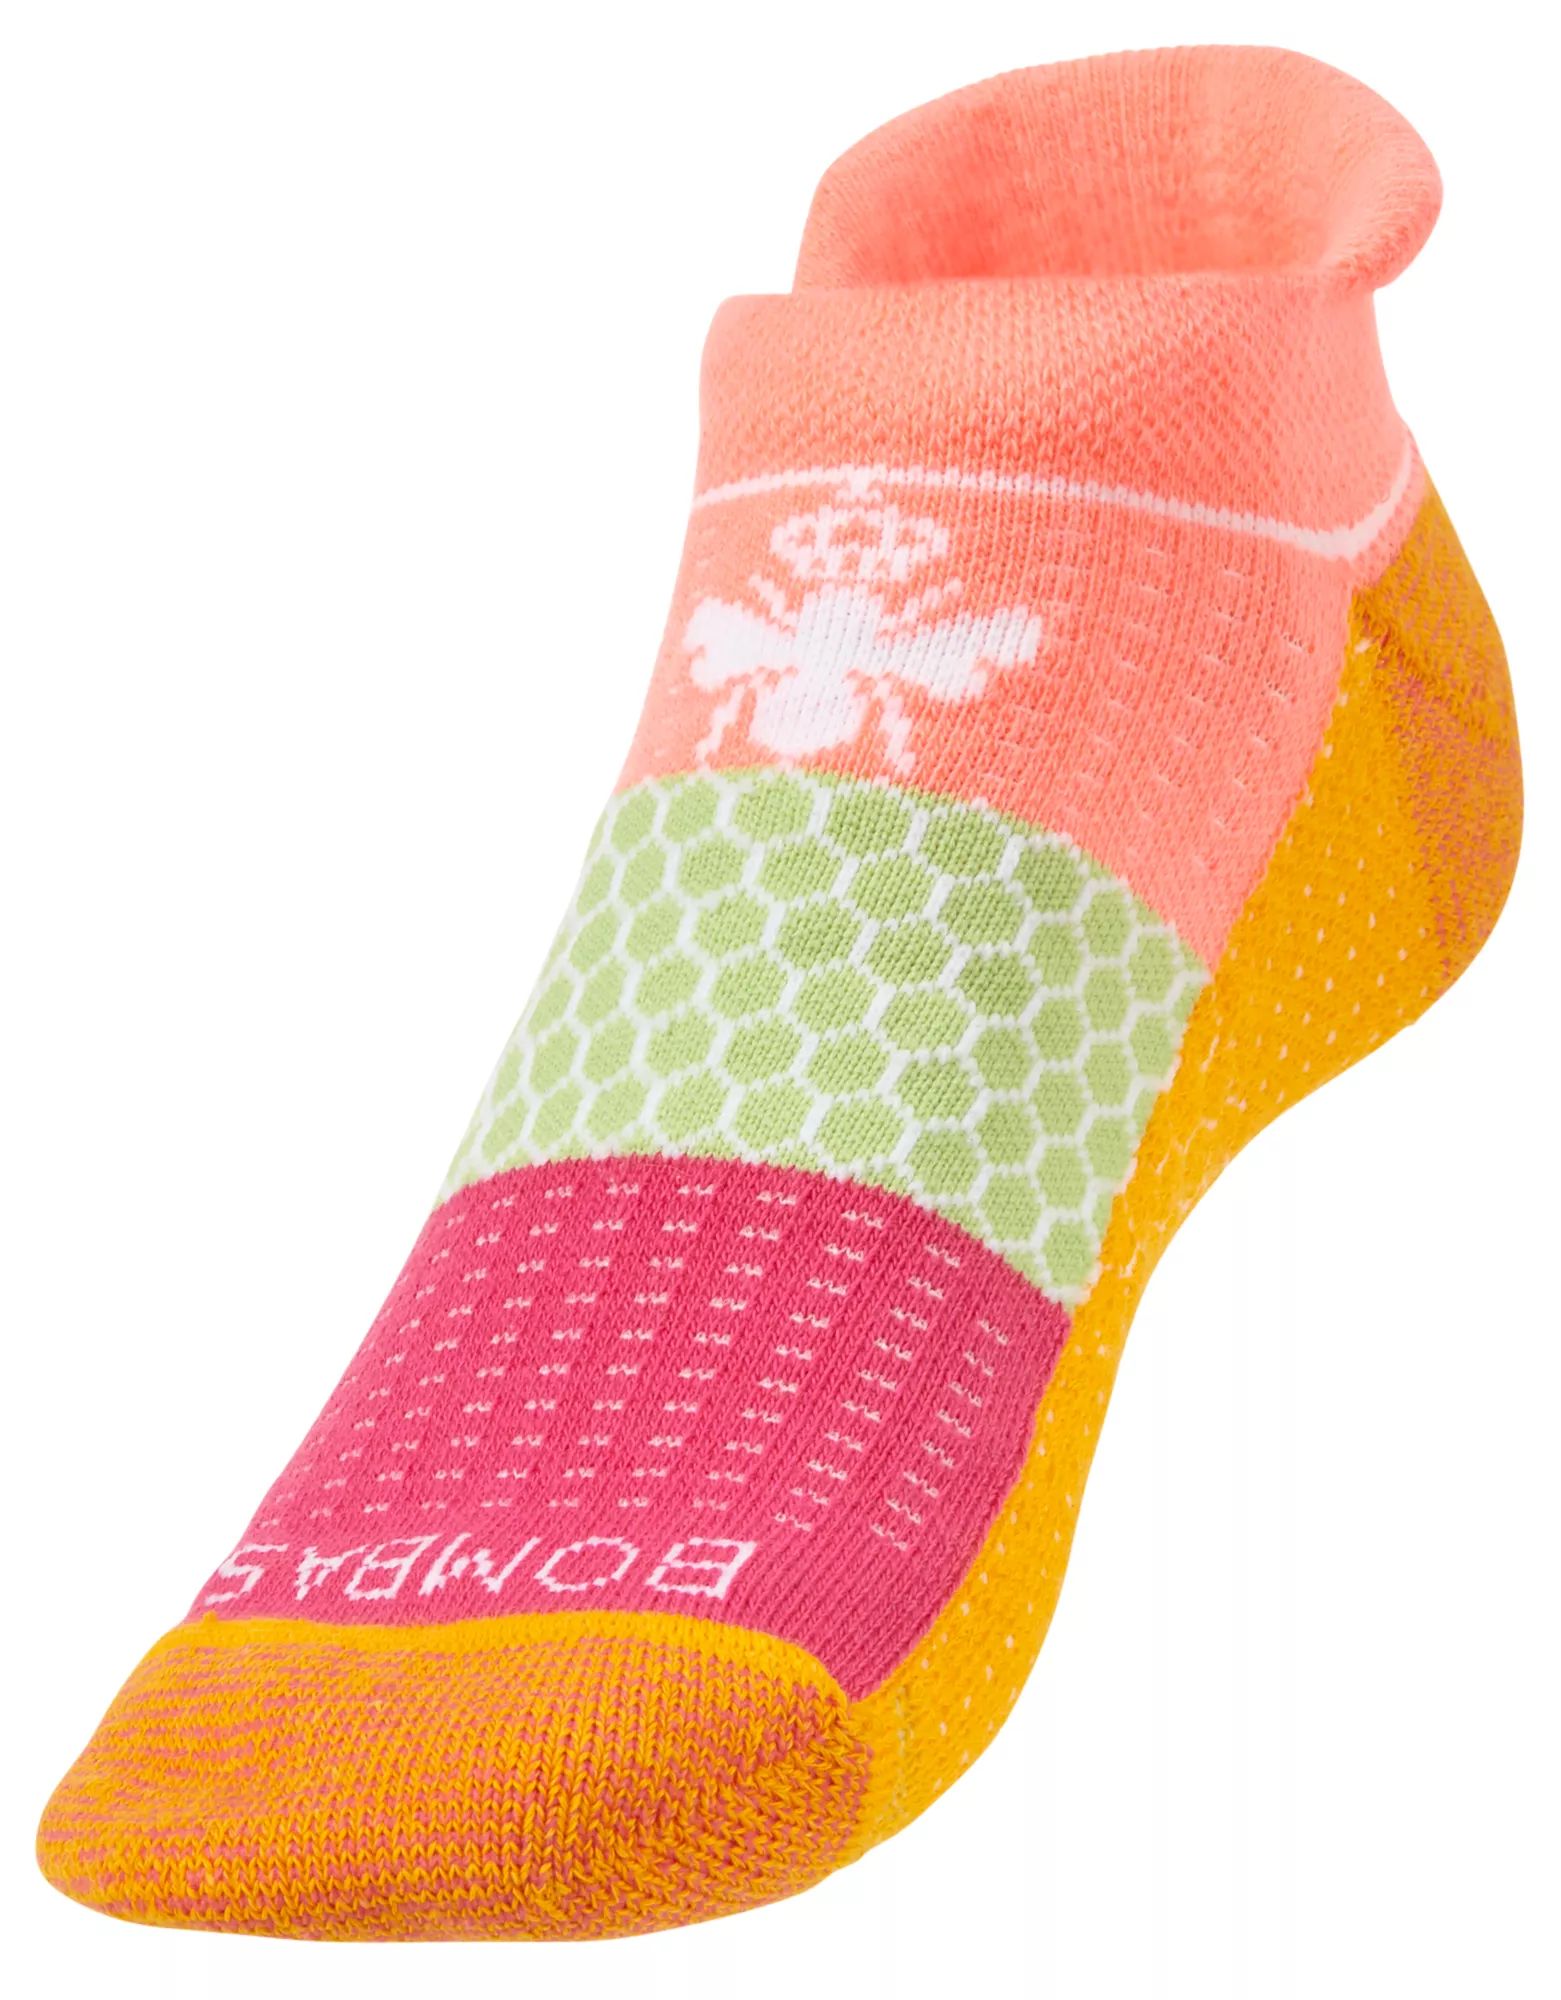 Bombas Women's Performance Ankle Socks, Small, Orange | Dick's Sporting Goods